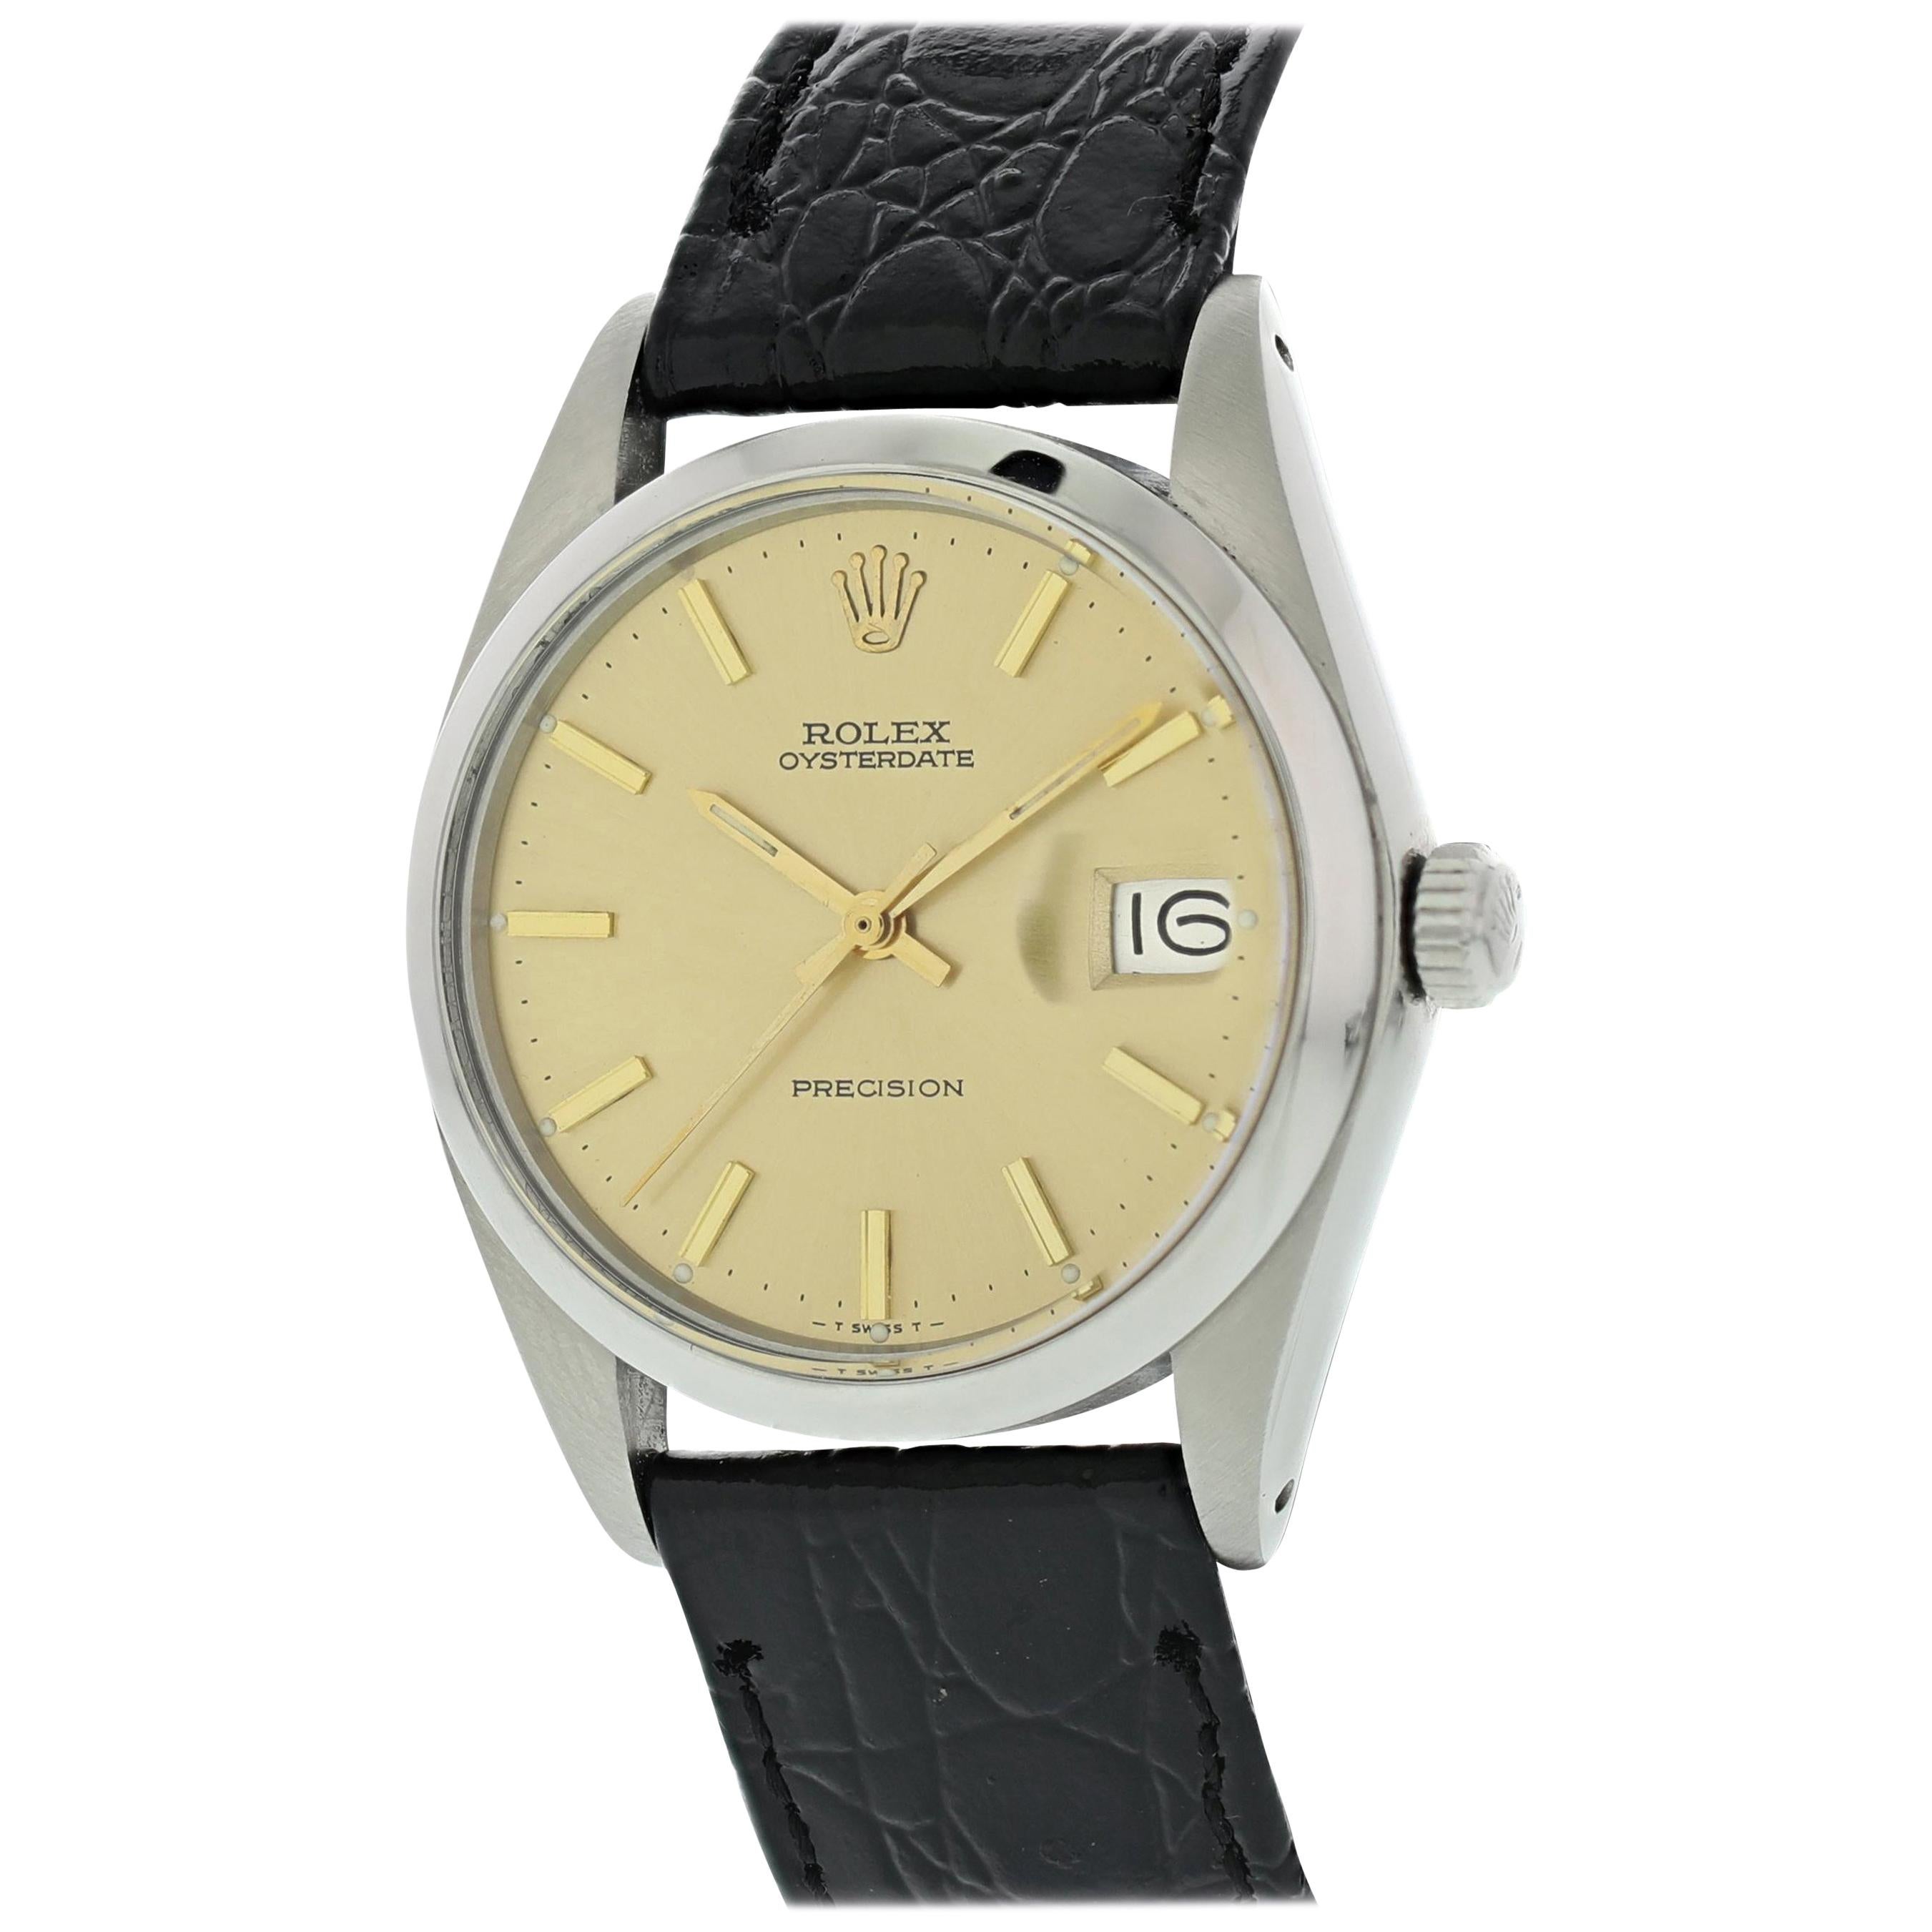 Rolex Oysterdate Precision 6694 Men's Watch